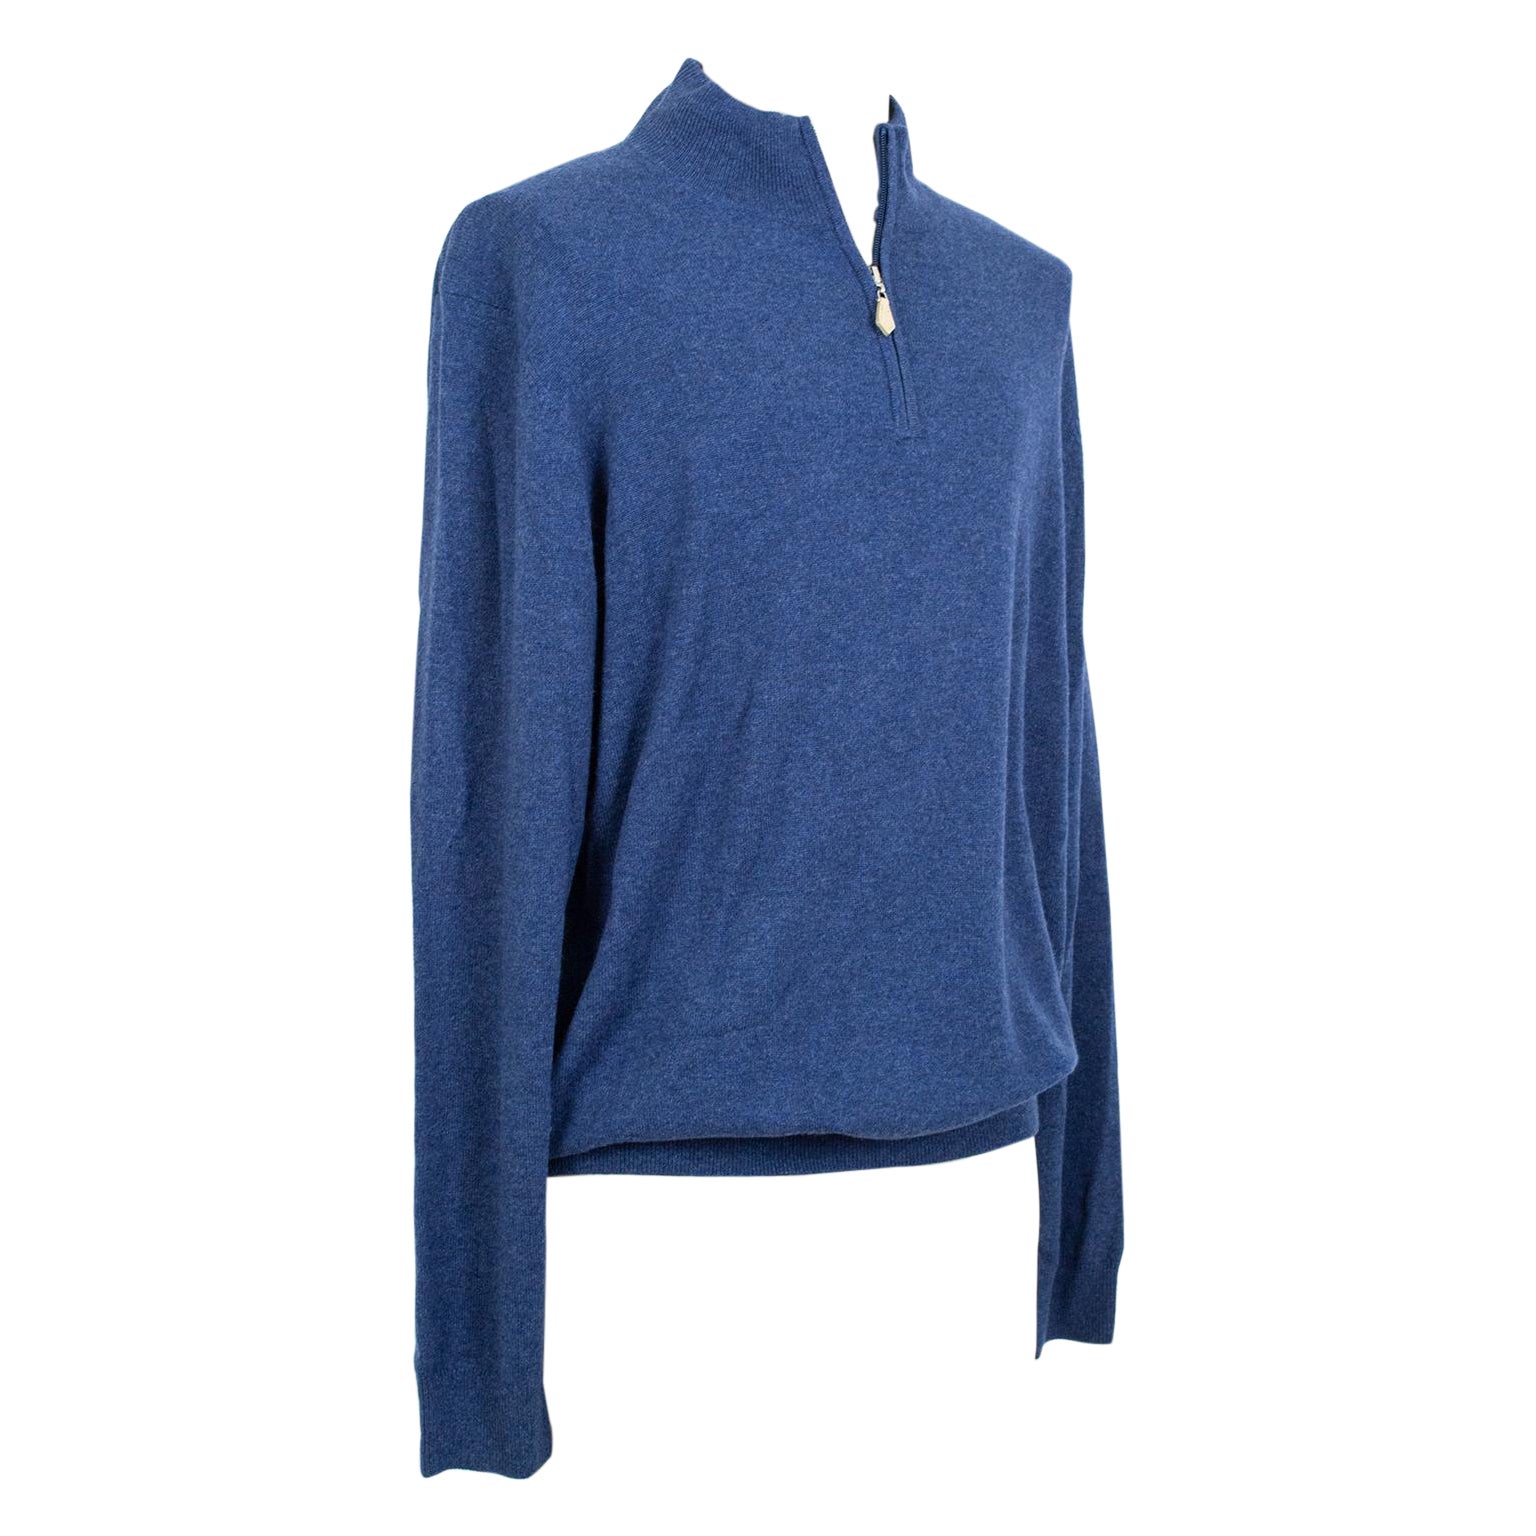 New *Large Size* Men’s Neiman Marcus Blue Cashmere Half-Zip Sweater – XXL, 2019